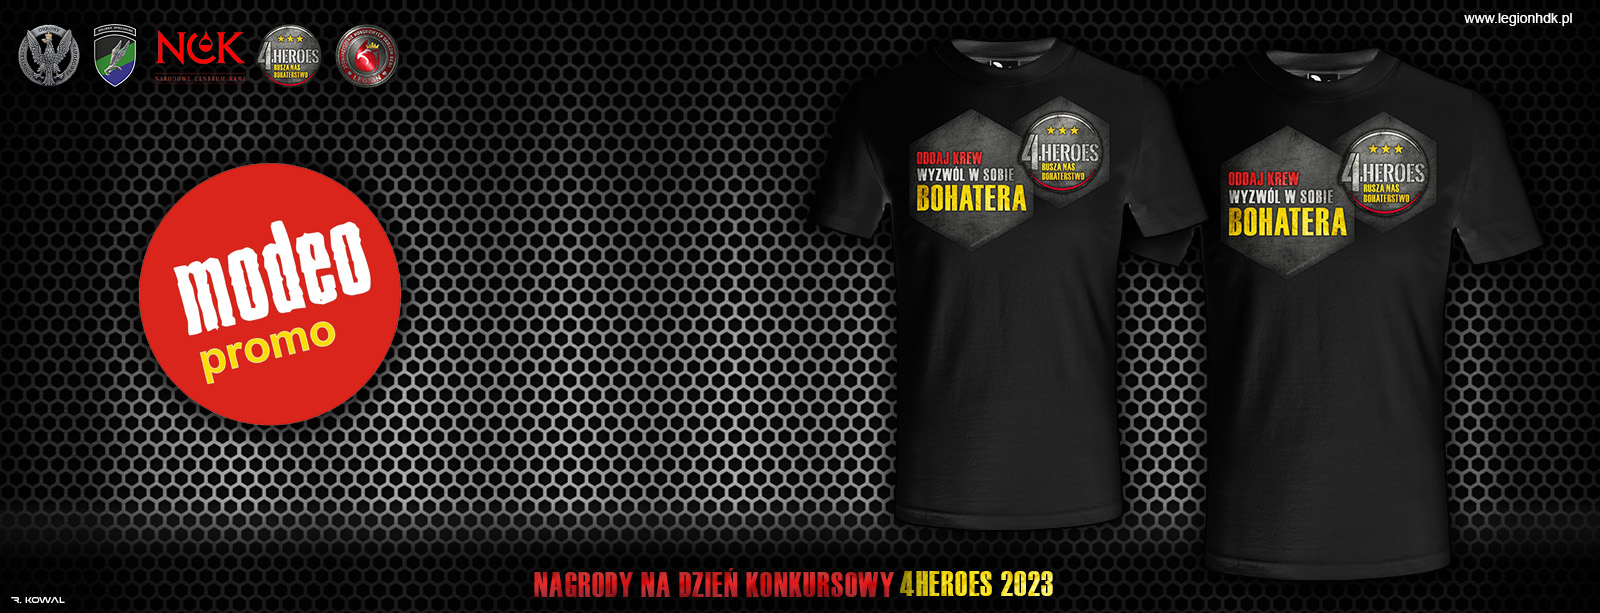 modeo koszulki nagrody kampanii 4HEROES 2023 legionhdk